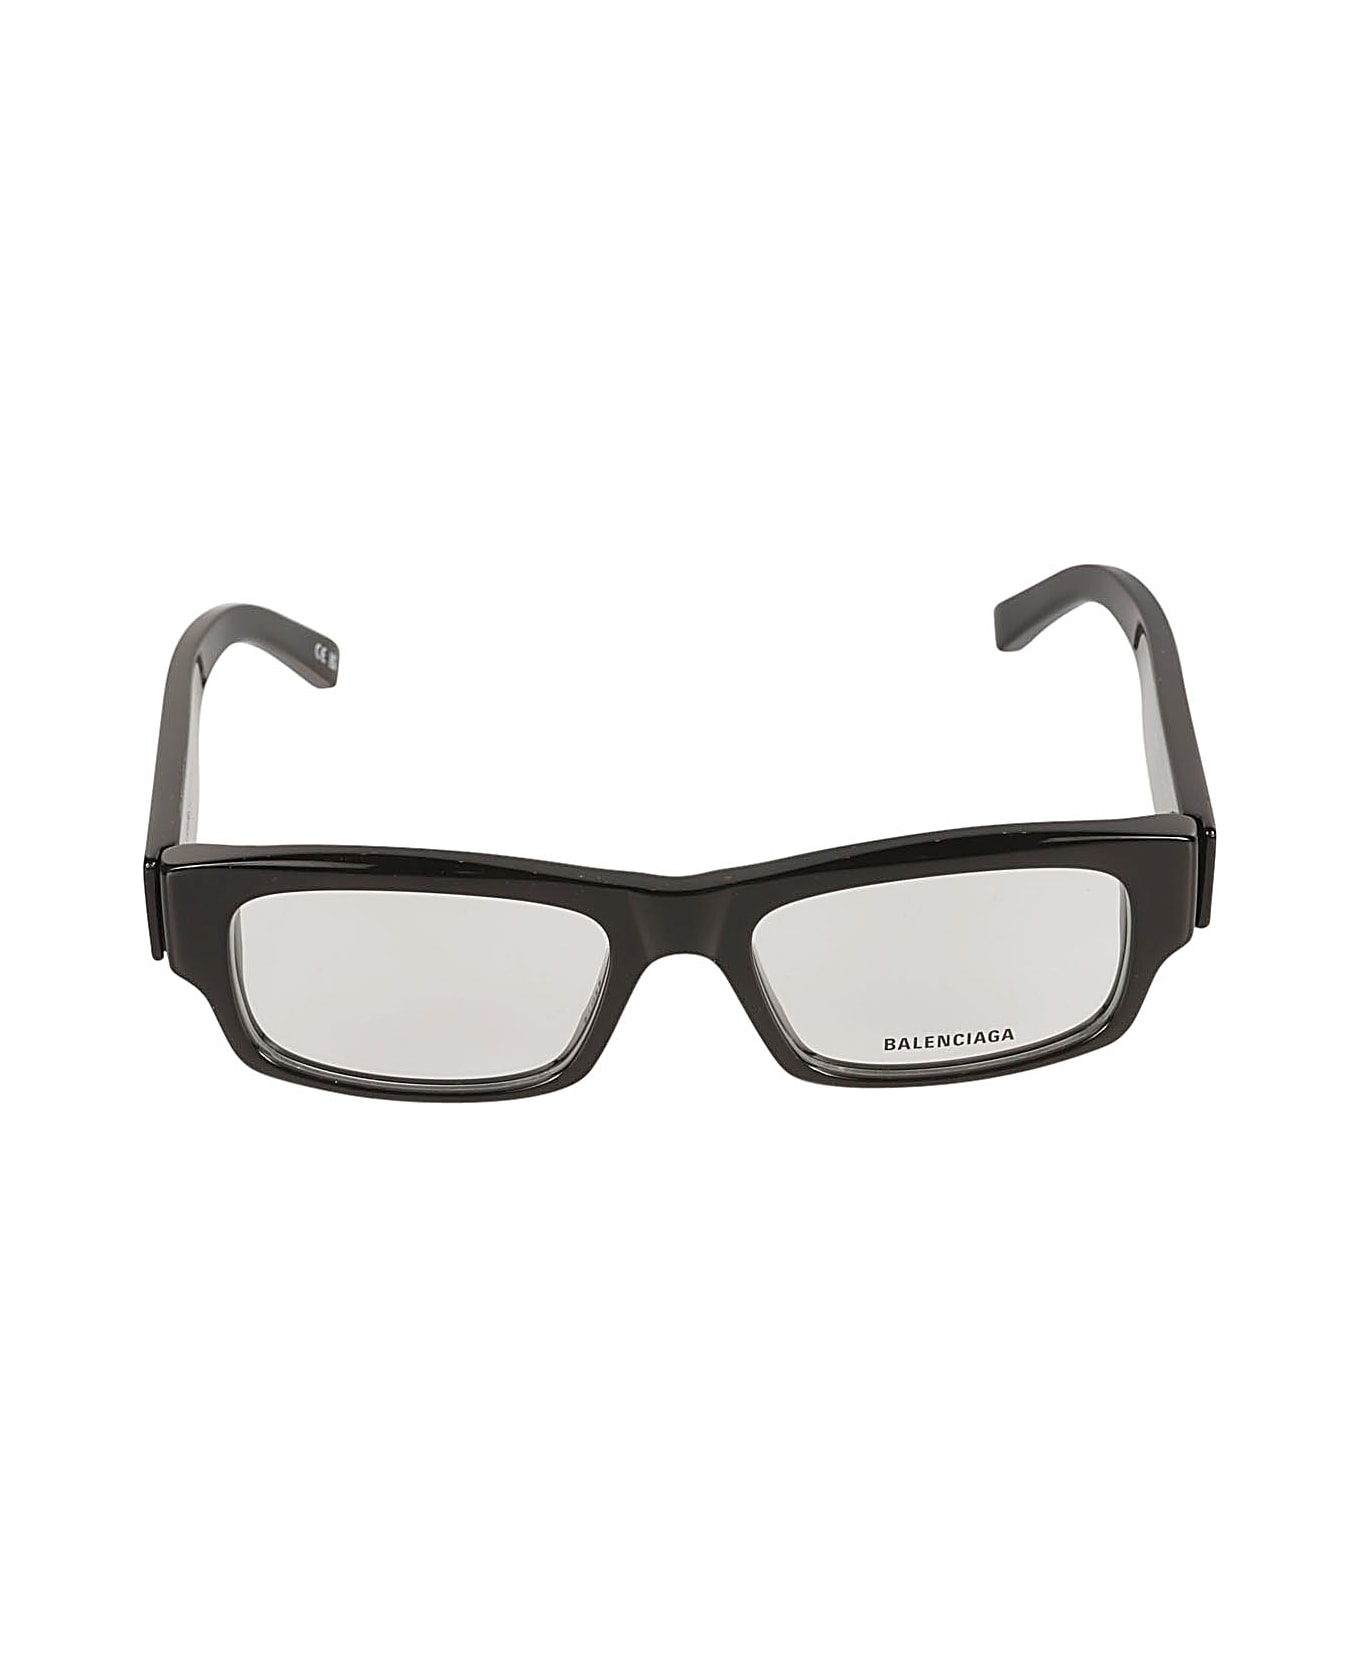 Balenciaga Eyewear Logo Sided Rectangular Frame Glasses - Black/Transparent